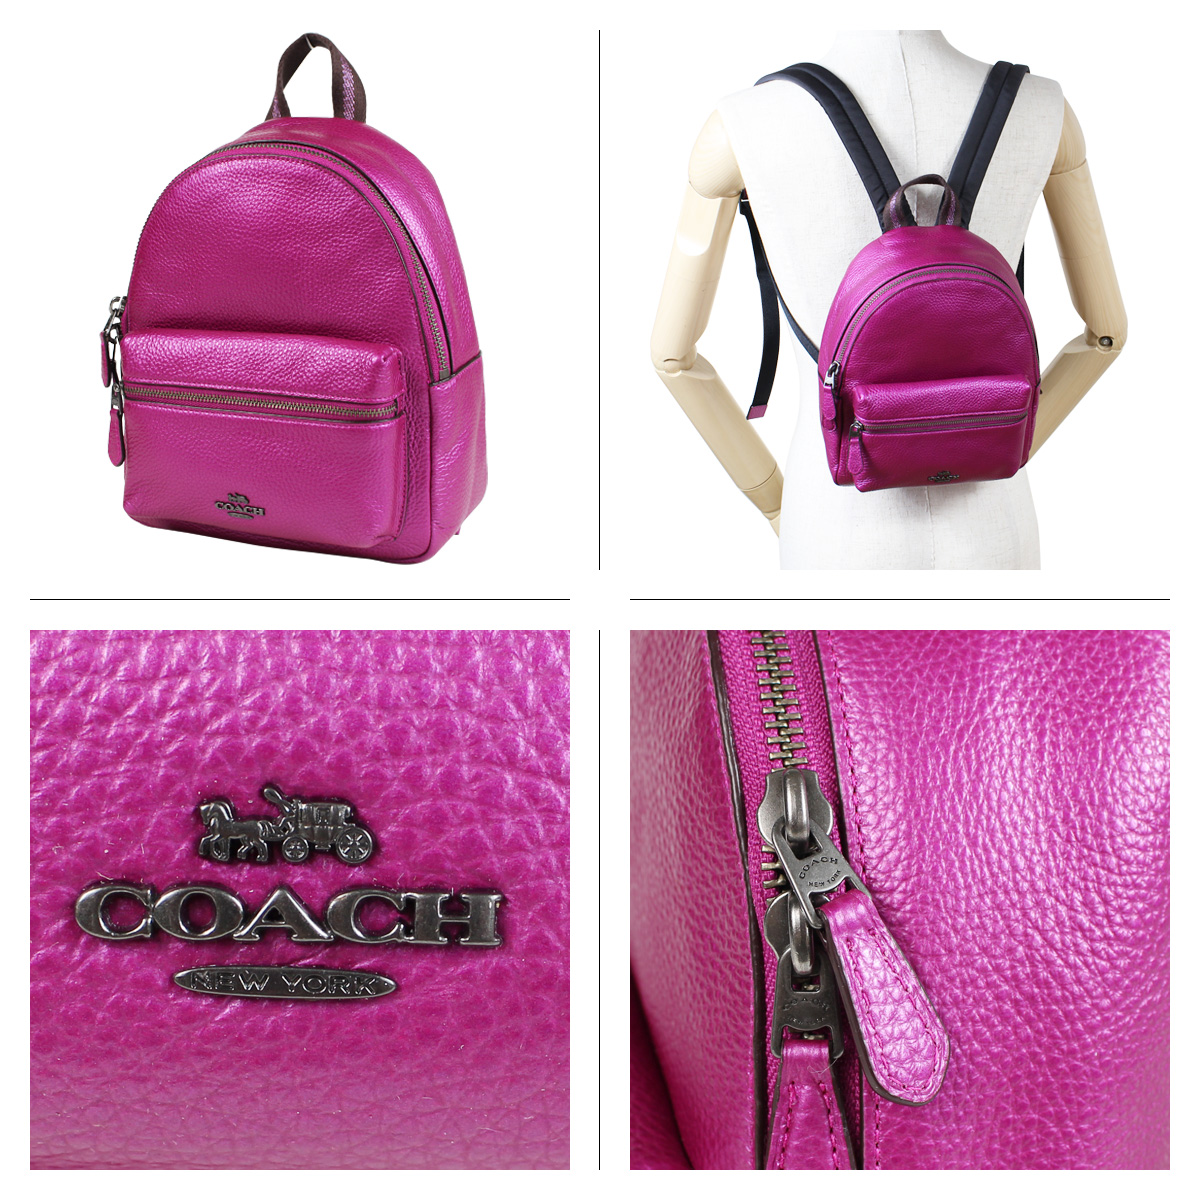 Sugar Online Shop: COACH coach bag rucksack backpack Lady&#39;s leather purple F29795 | Rakuten ...